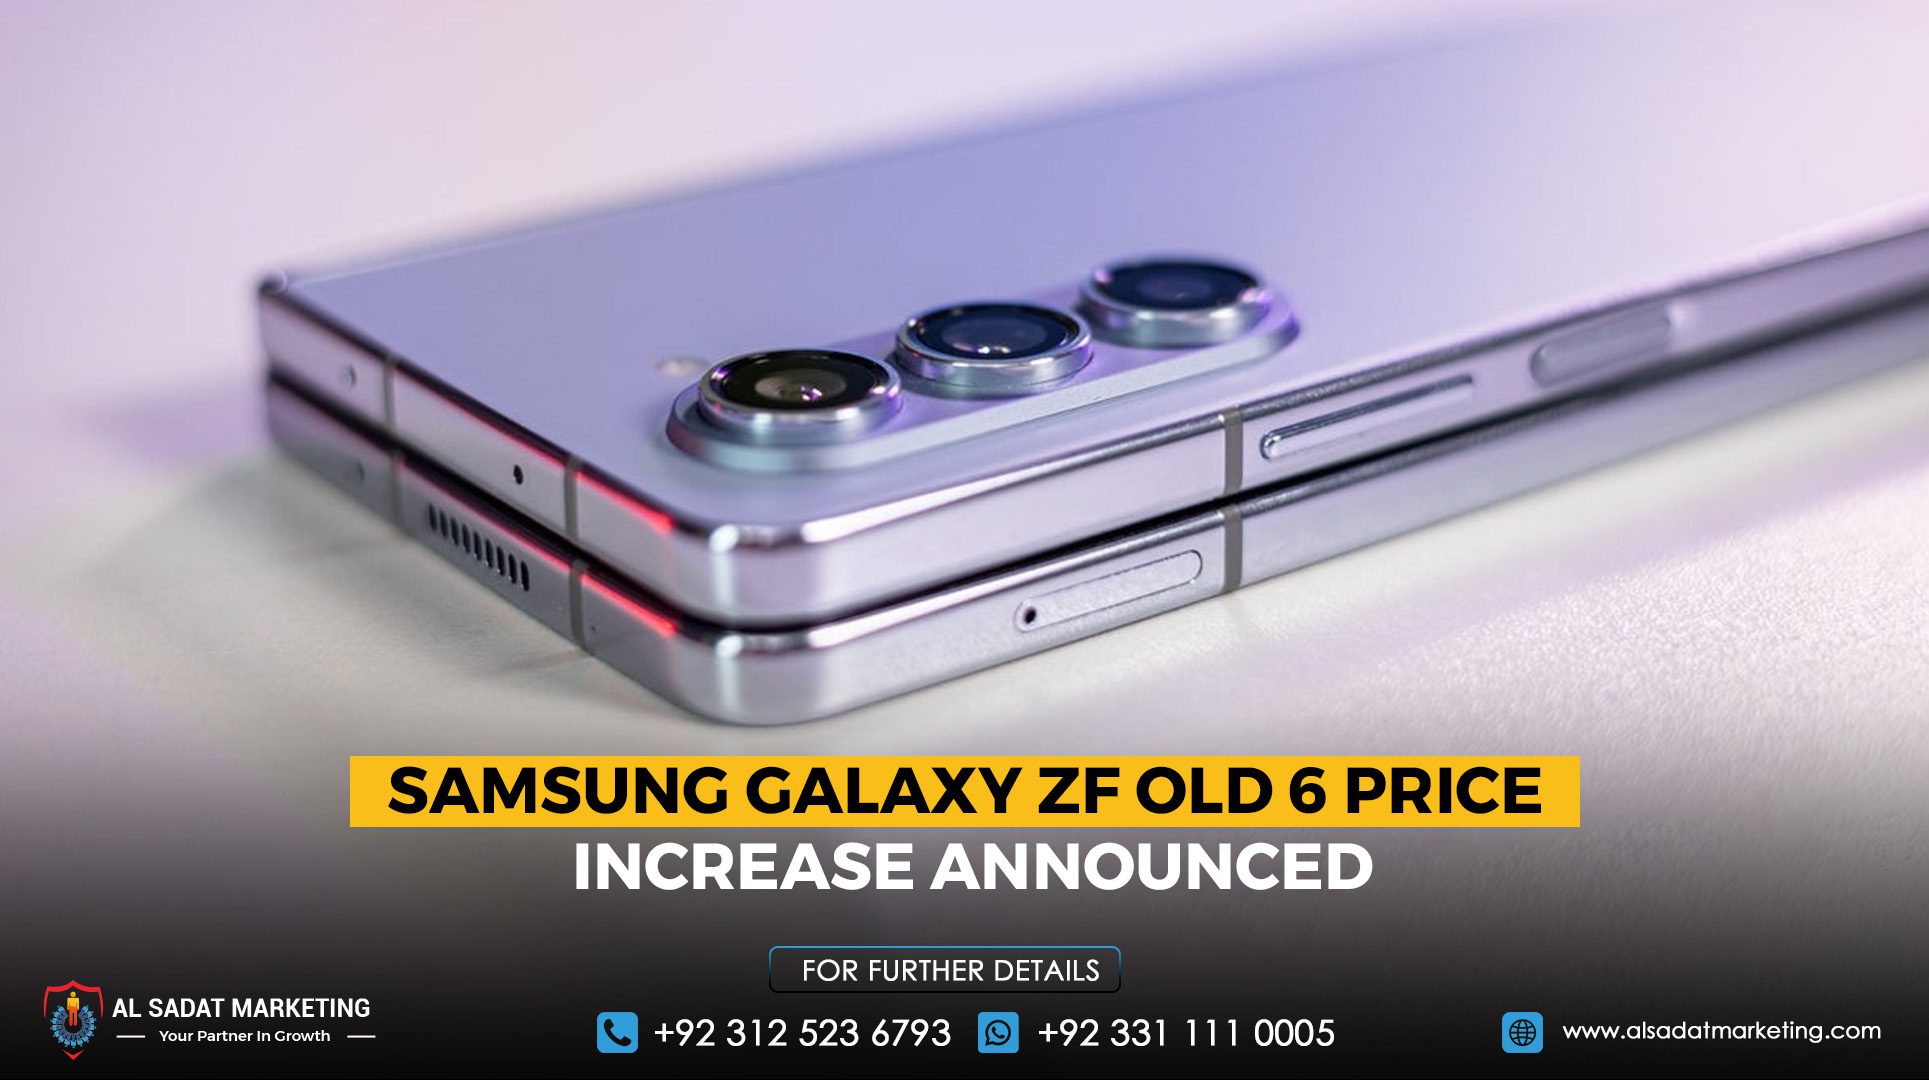 Samsung Galaxy Z Fold 6 Price Increase Announced